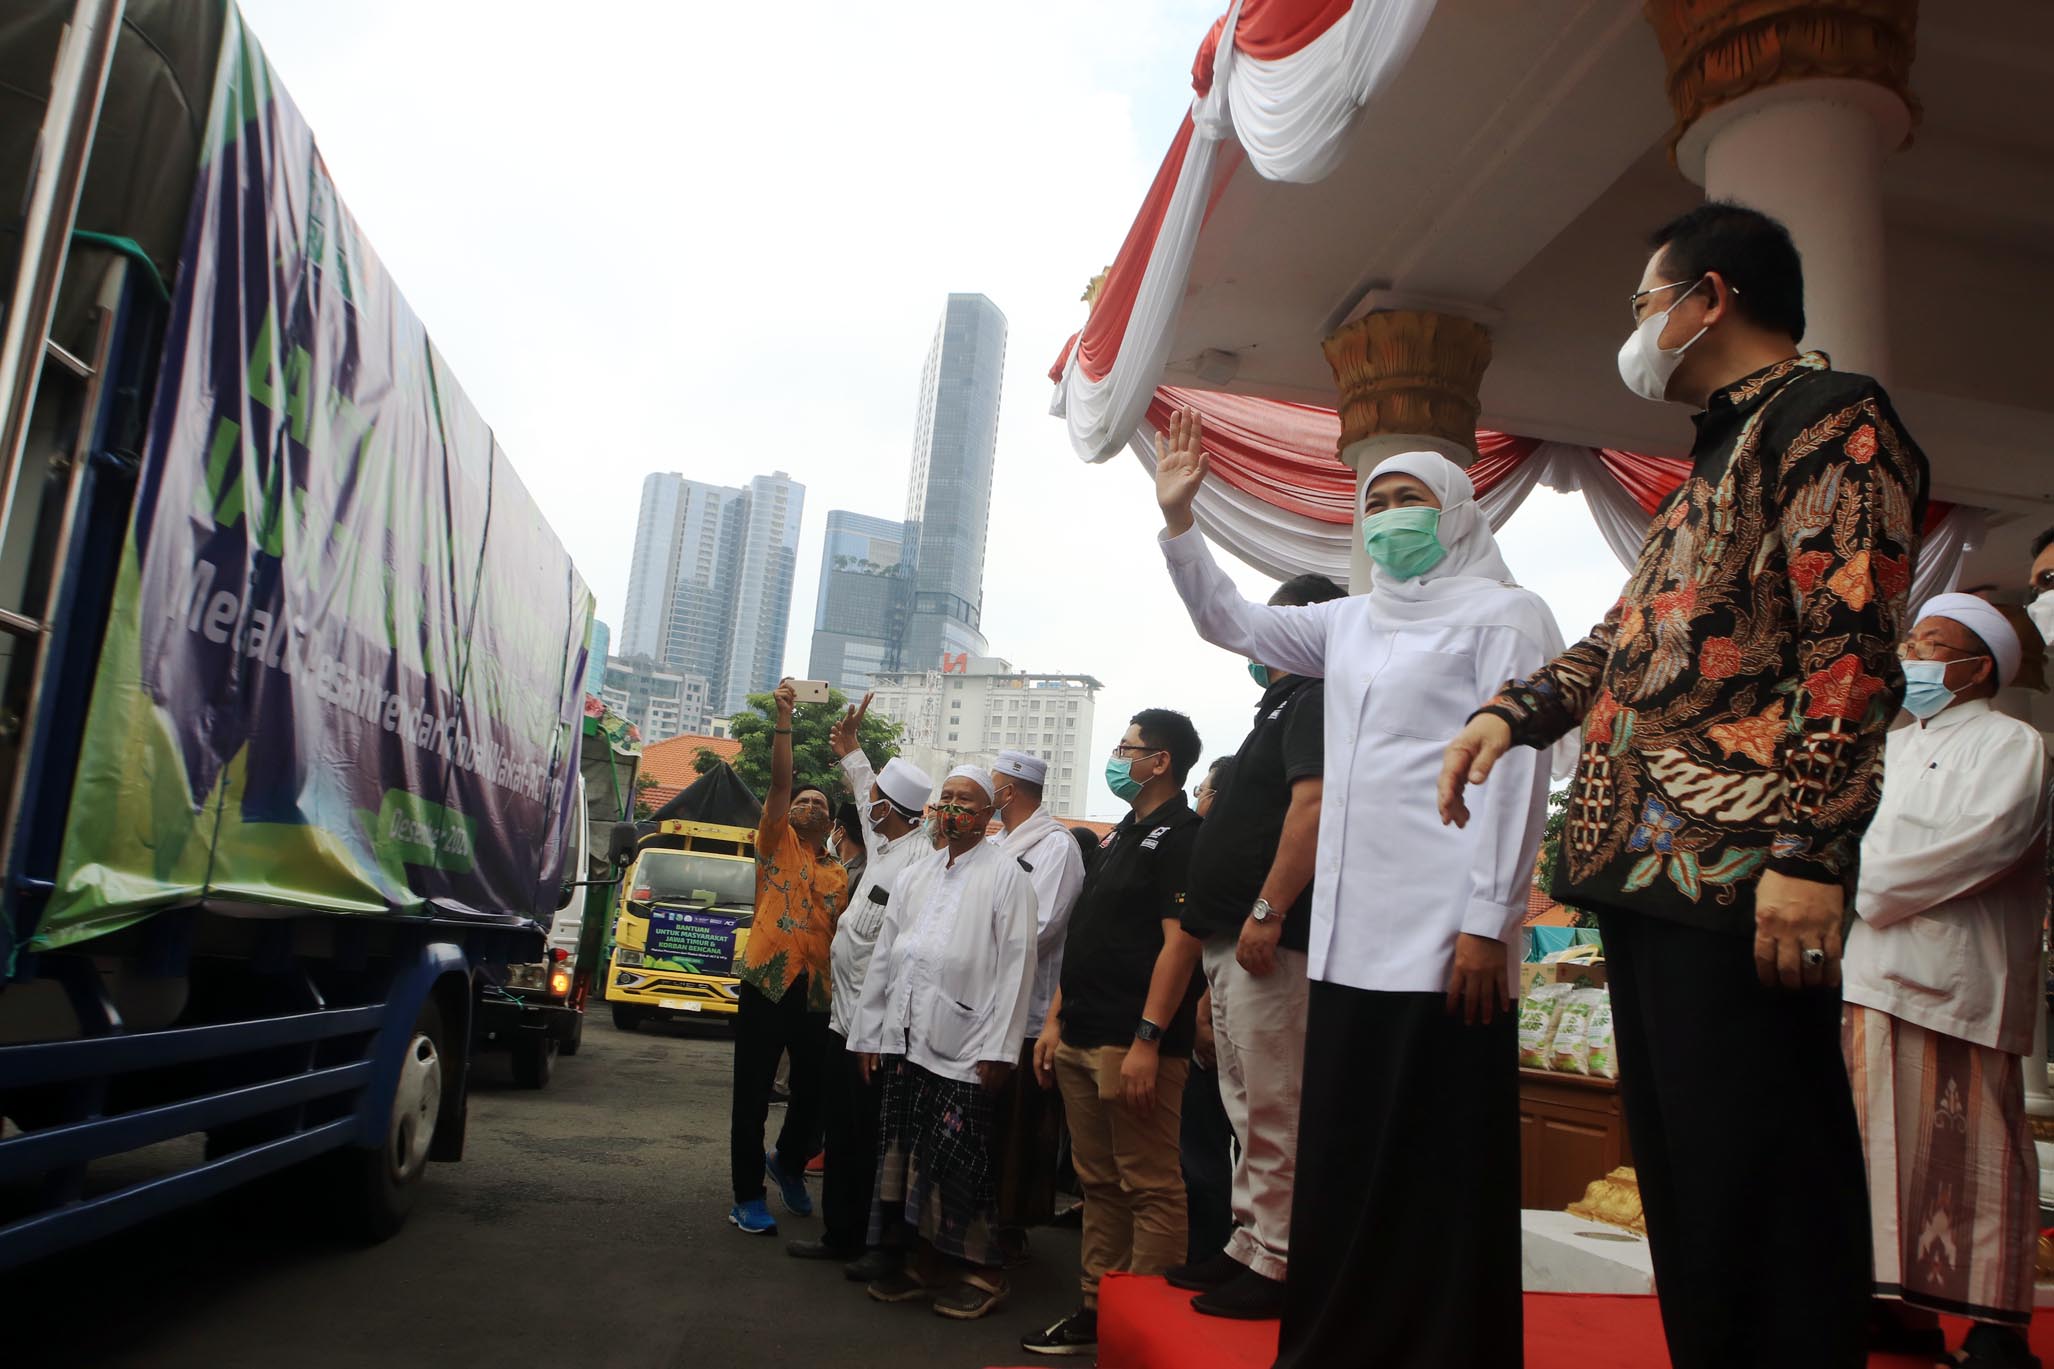 Gubernur Jawa Timur (Jatim), Khofifah Indar Parawansa ketika melepas bantuan 100 ton beras serta 10.000 karton air mineral wakaf di Gedung Negara Grahadi, Surabaya, Minggu 27 Desember 2020. (Foto: Istimewa)